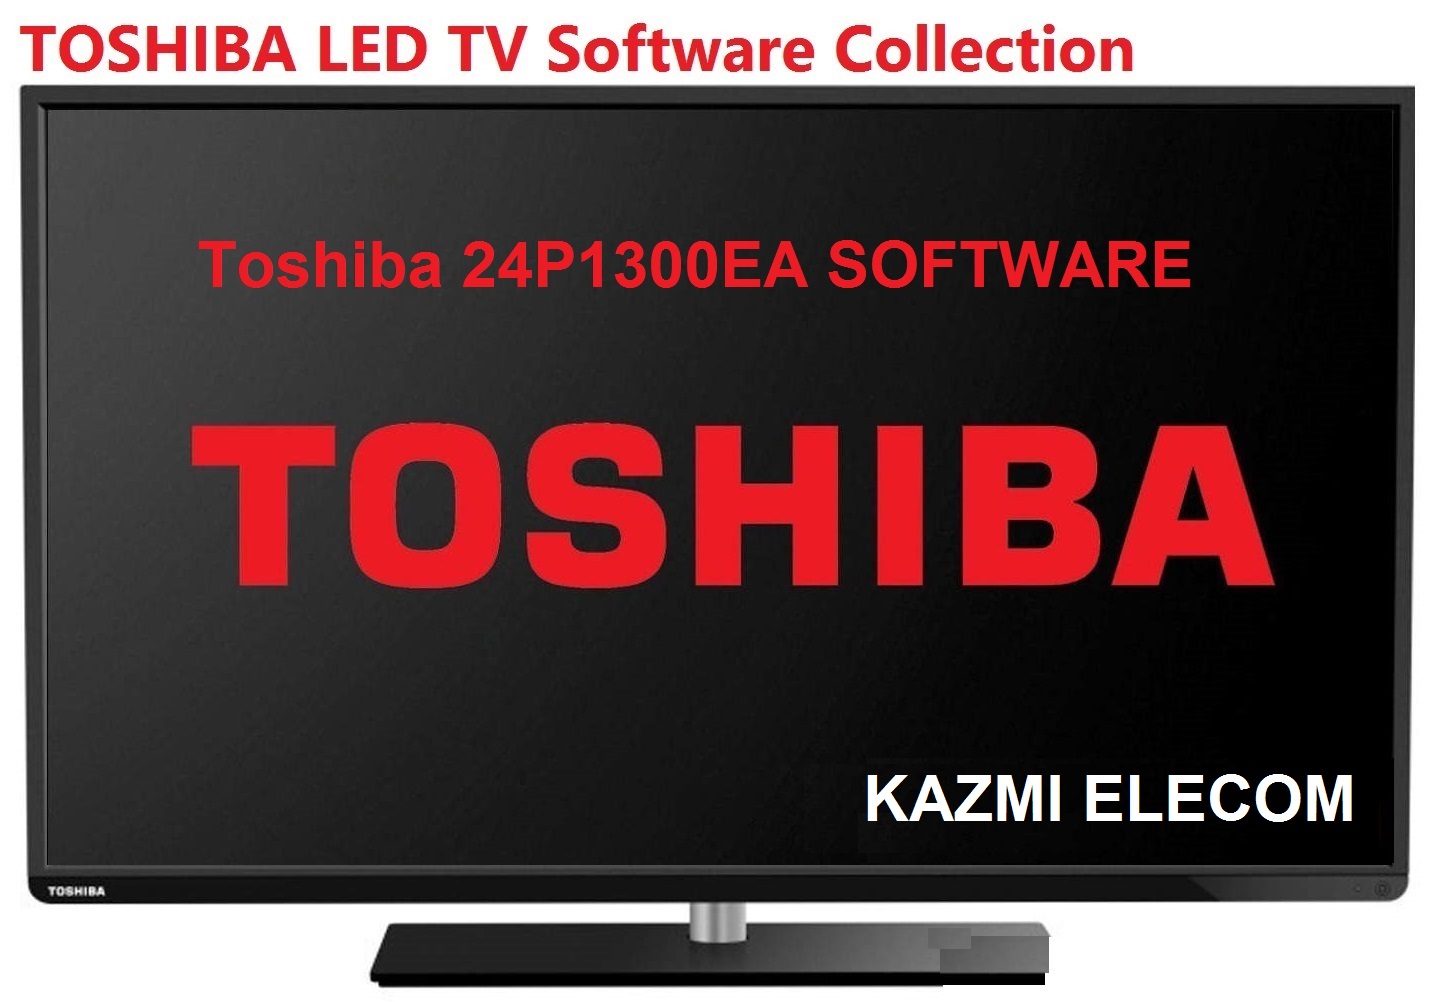 Toshiba 24P1300Ea